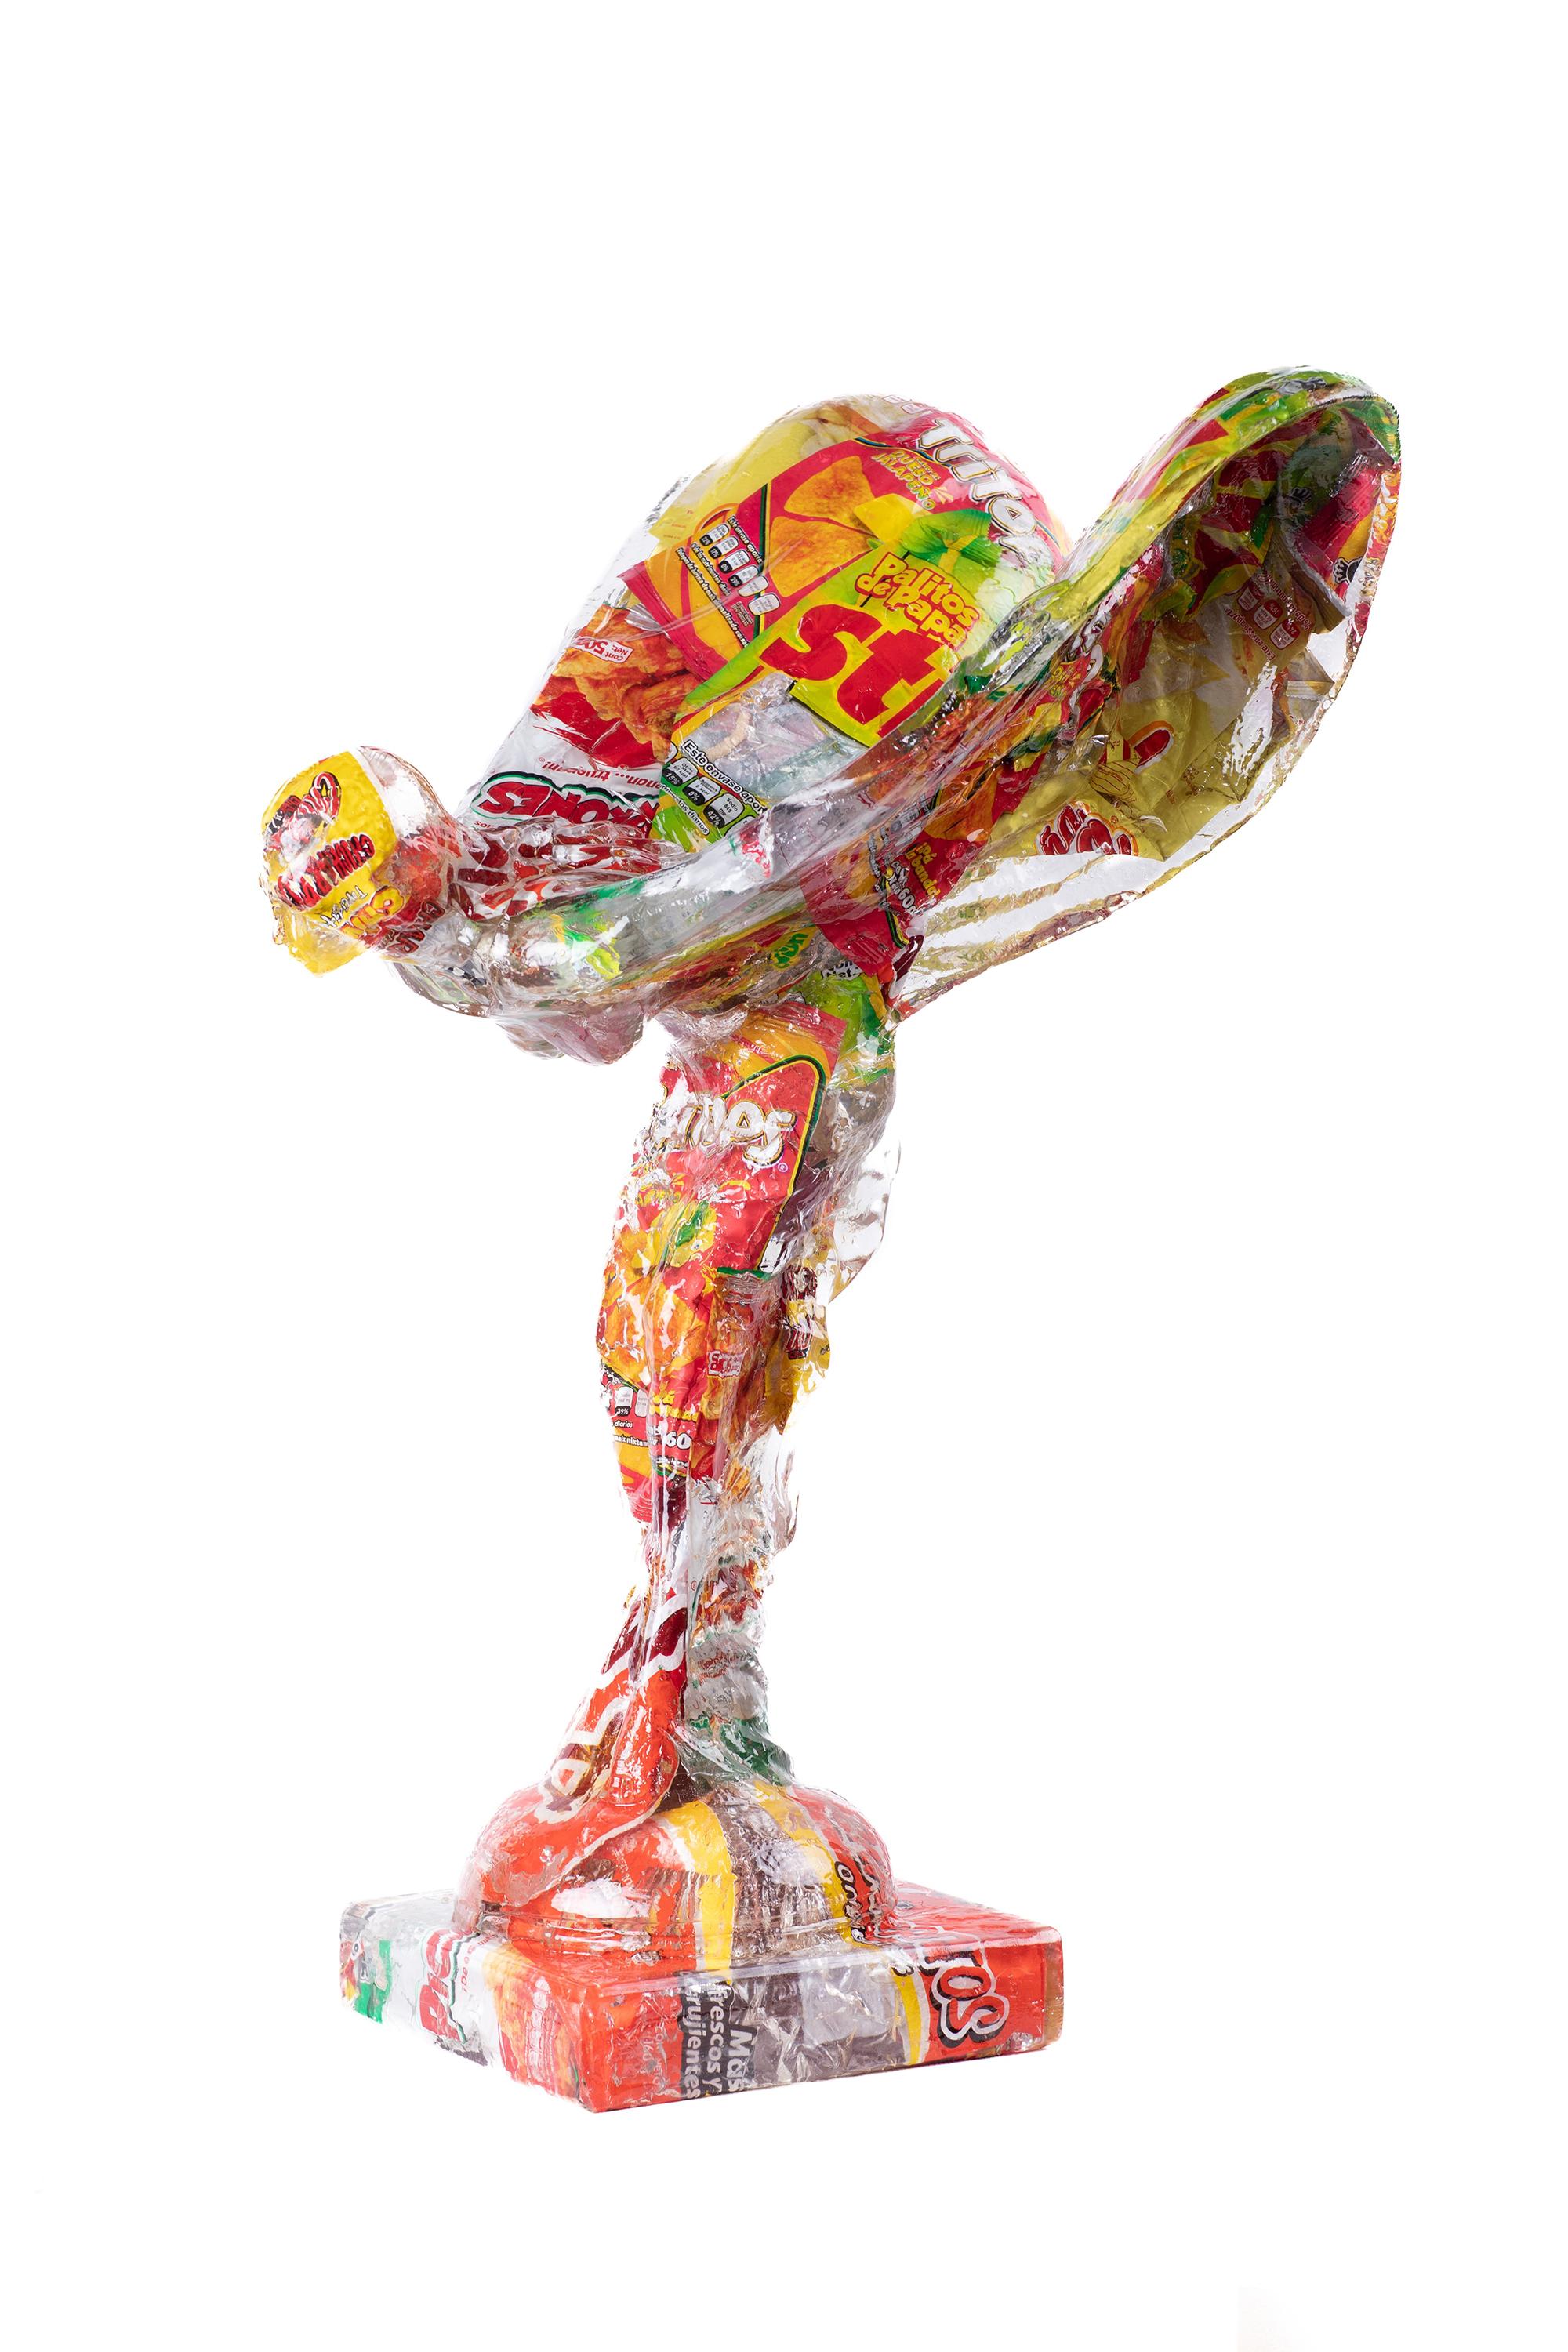 Alben Figurative Sculpture - Spirit of Ecstasy - Pop Art Sculpture 